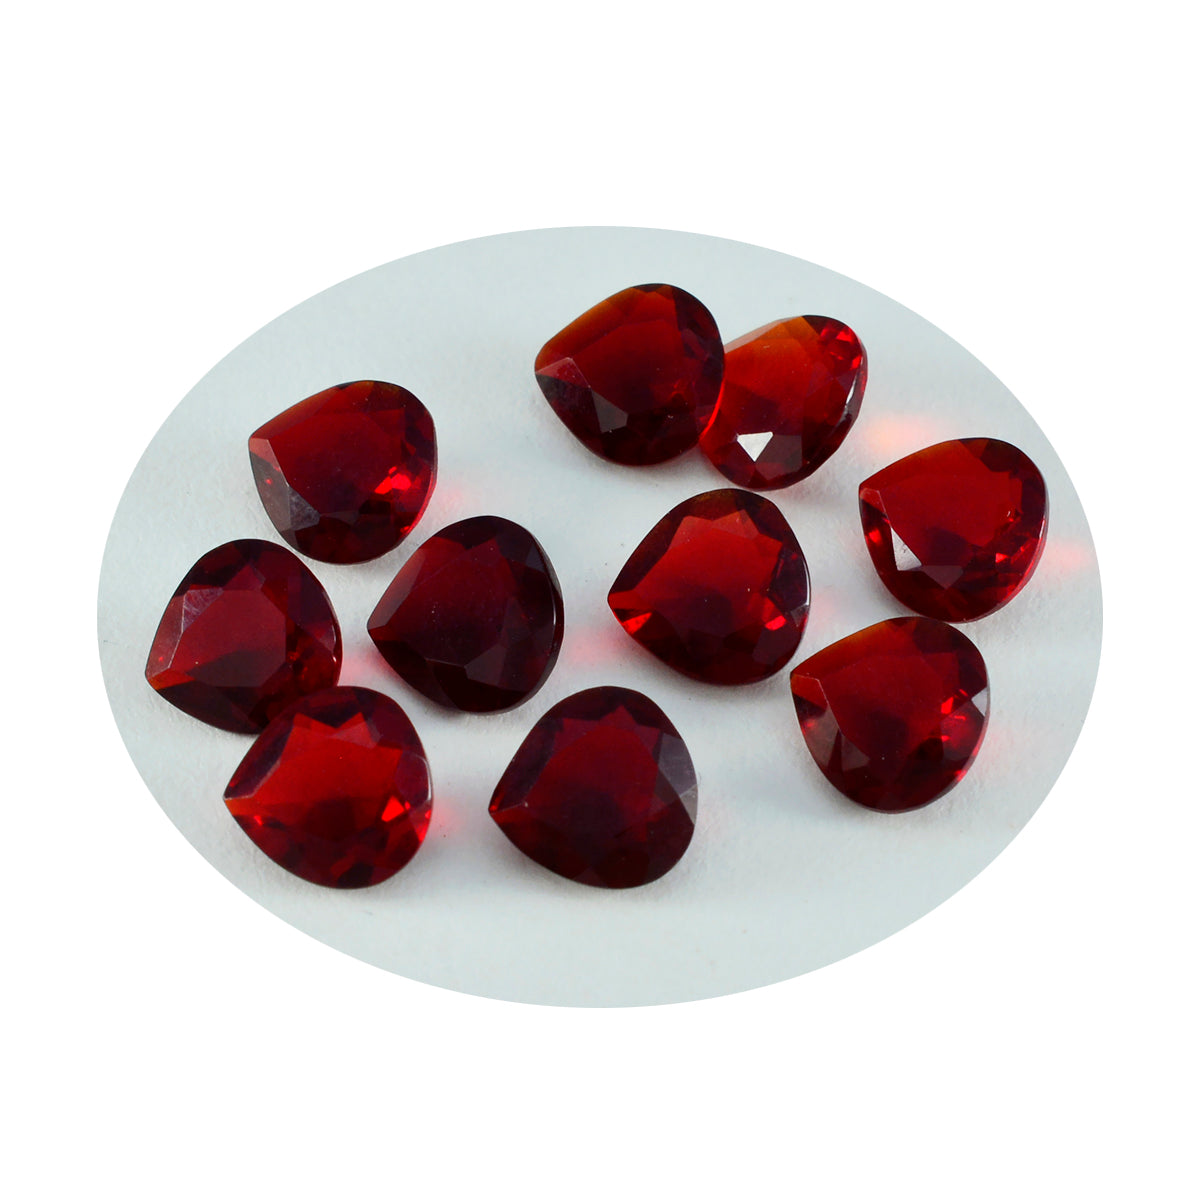 Riyogems 1PC Red Ruby CZ Faceted 5x5 mm Heart Shape startling Quality Gems